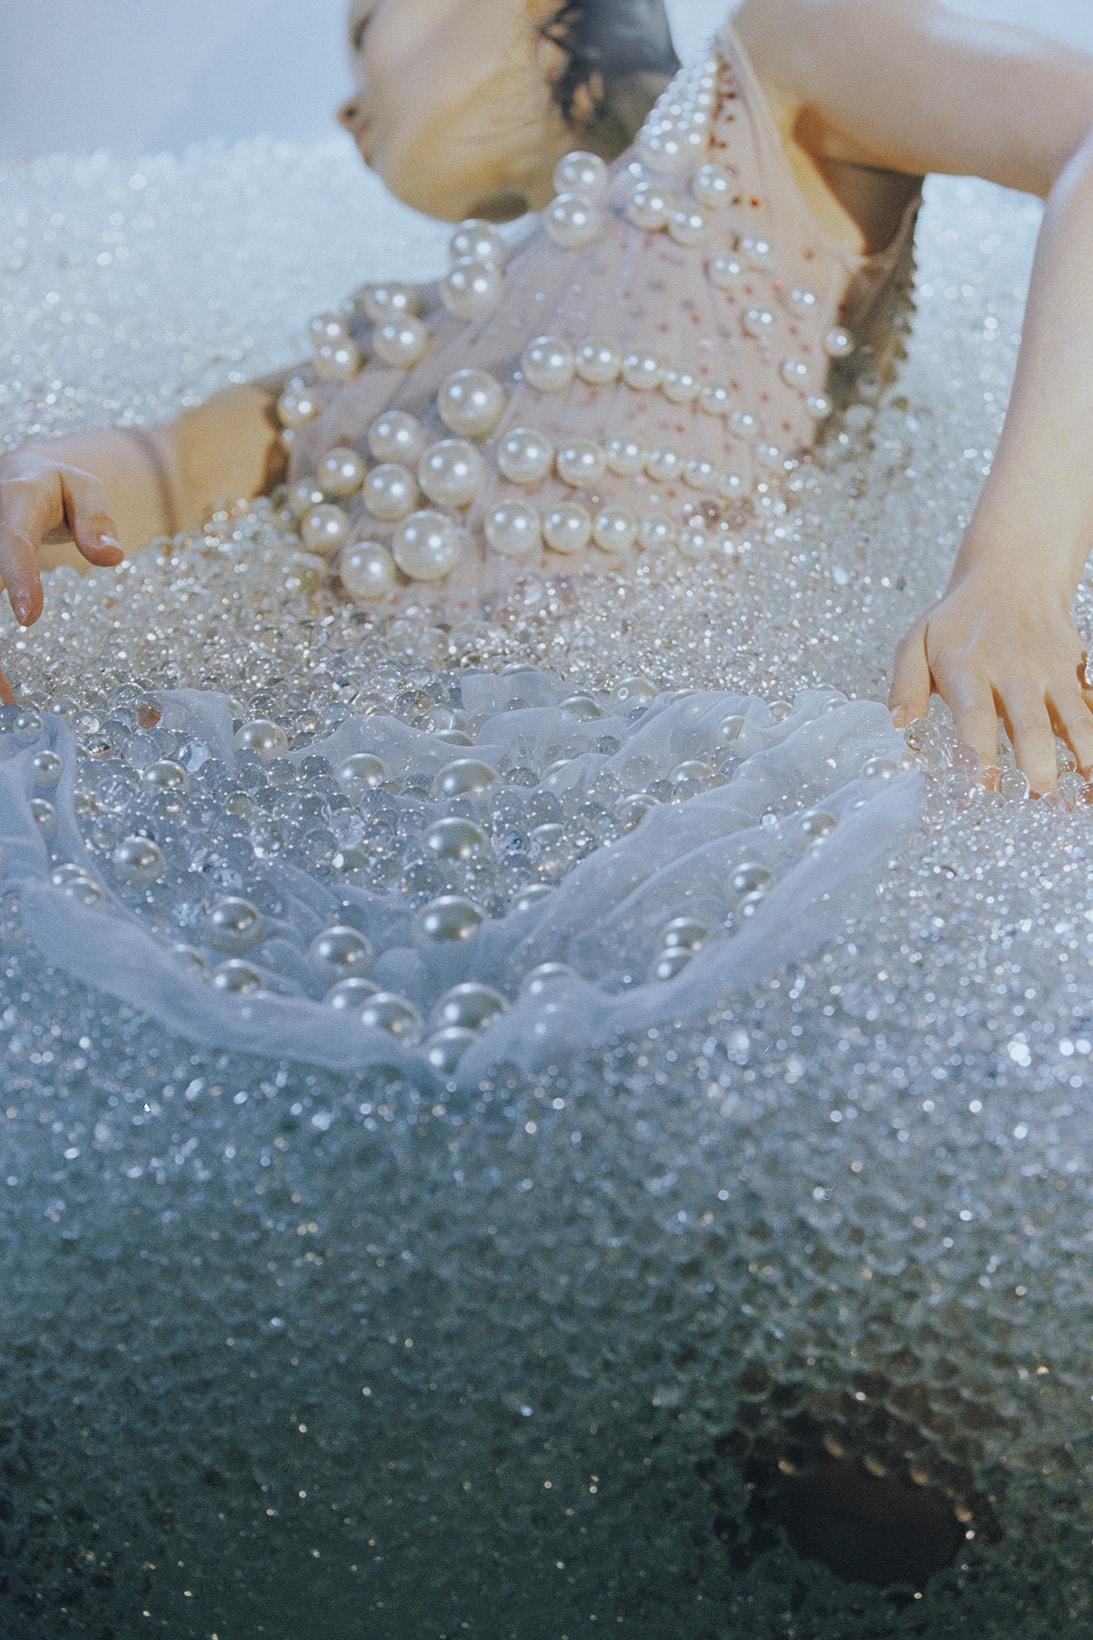 susan fang fall winter 2020 campaign glass beads model shot